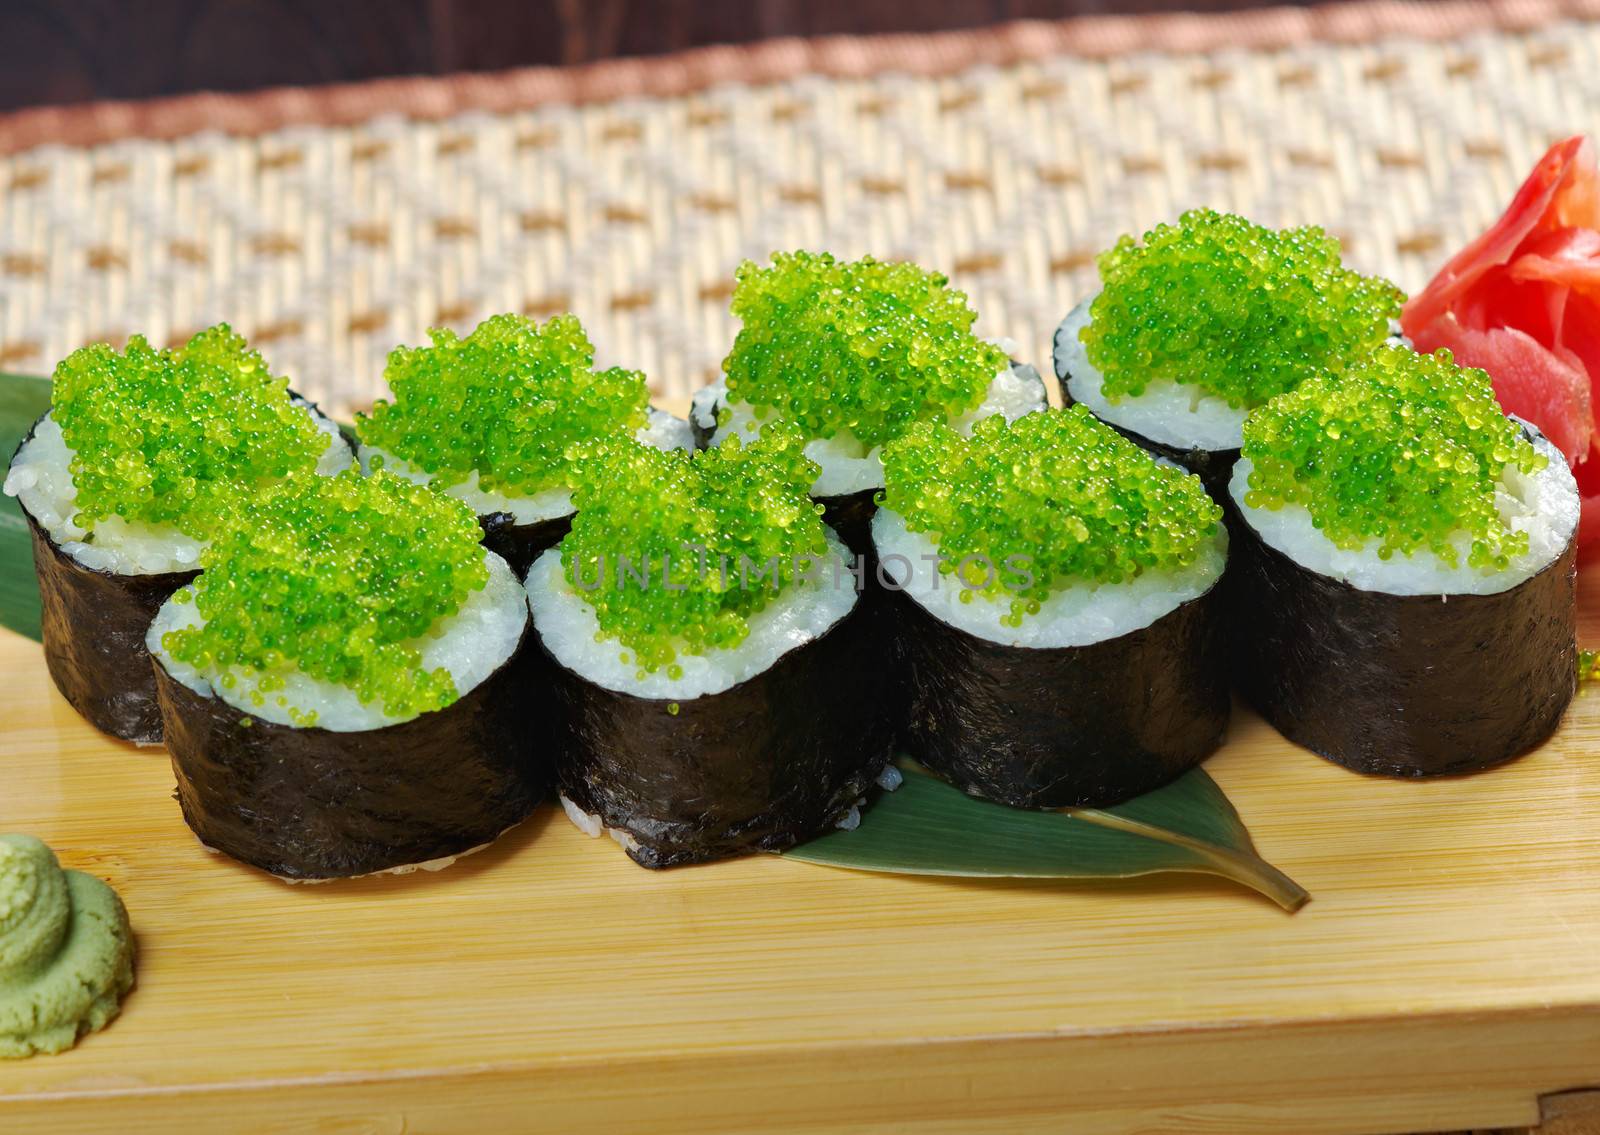 Tobiko (flying fish roe) Gunkan Maki Sushi.Roll made of Smoked fish